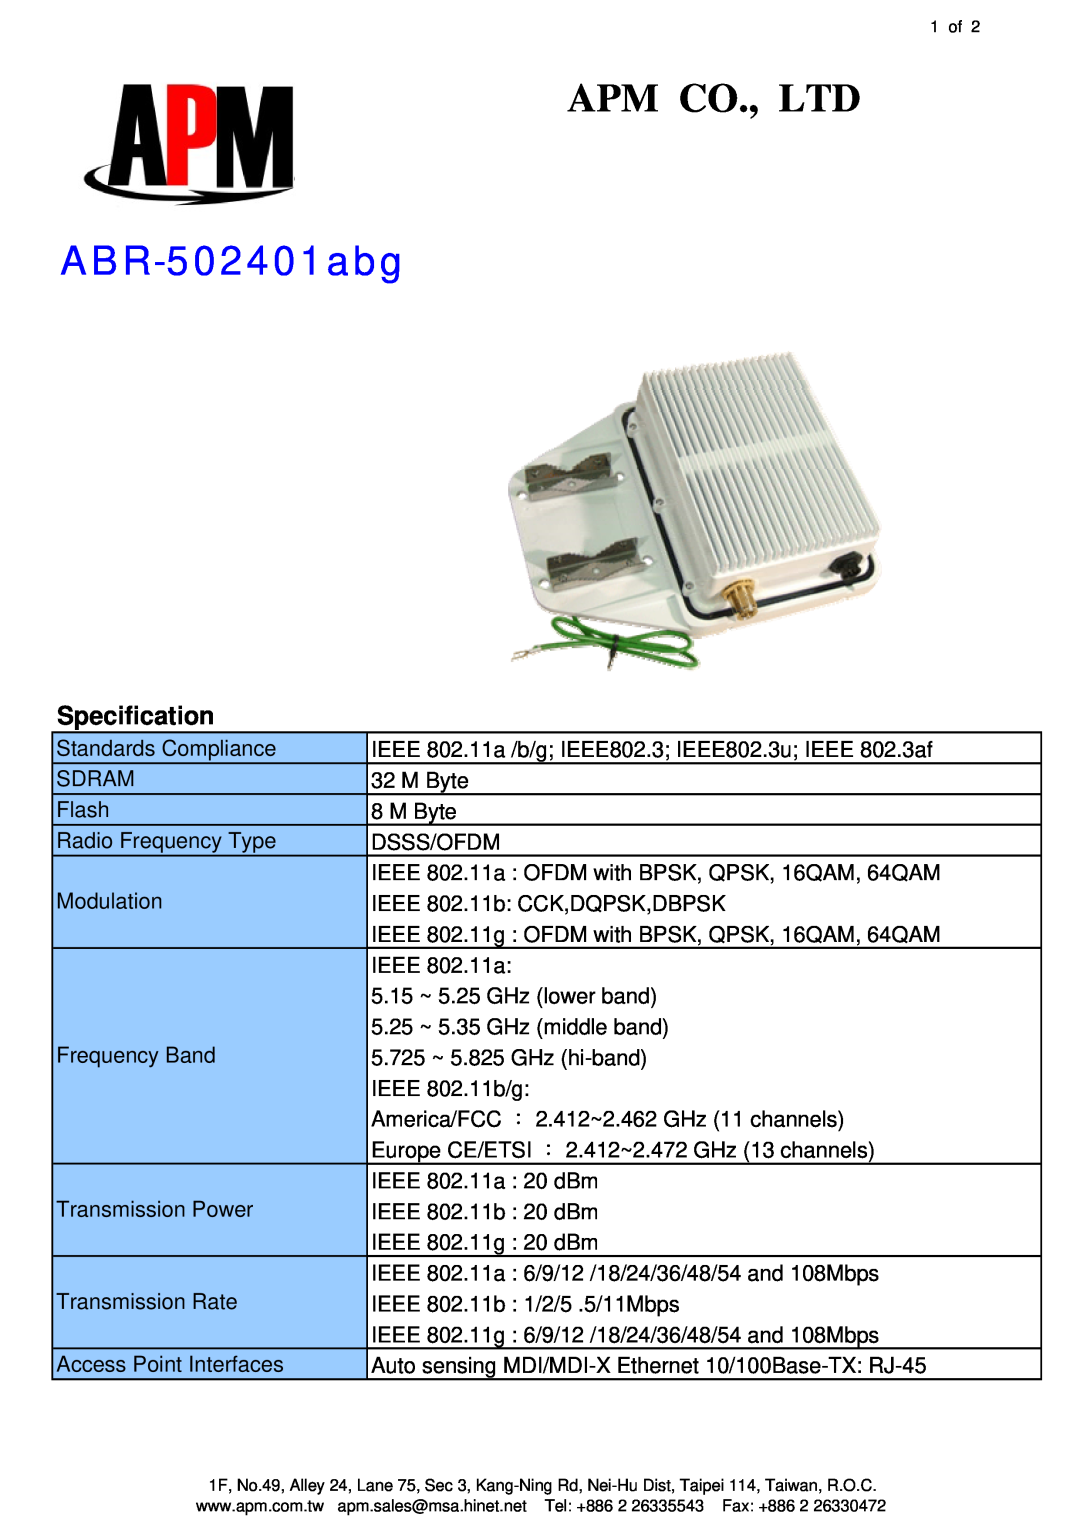 APM ABR-502401ABG manual ABR-502401abg, Specification 